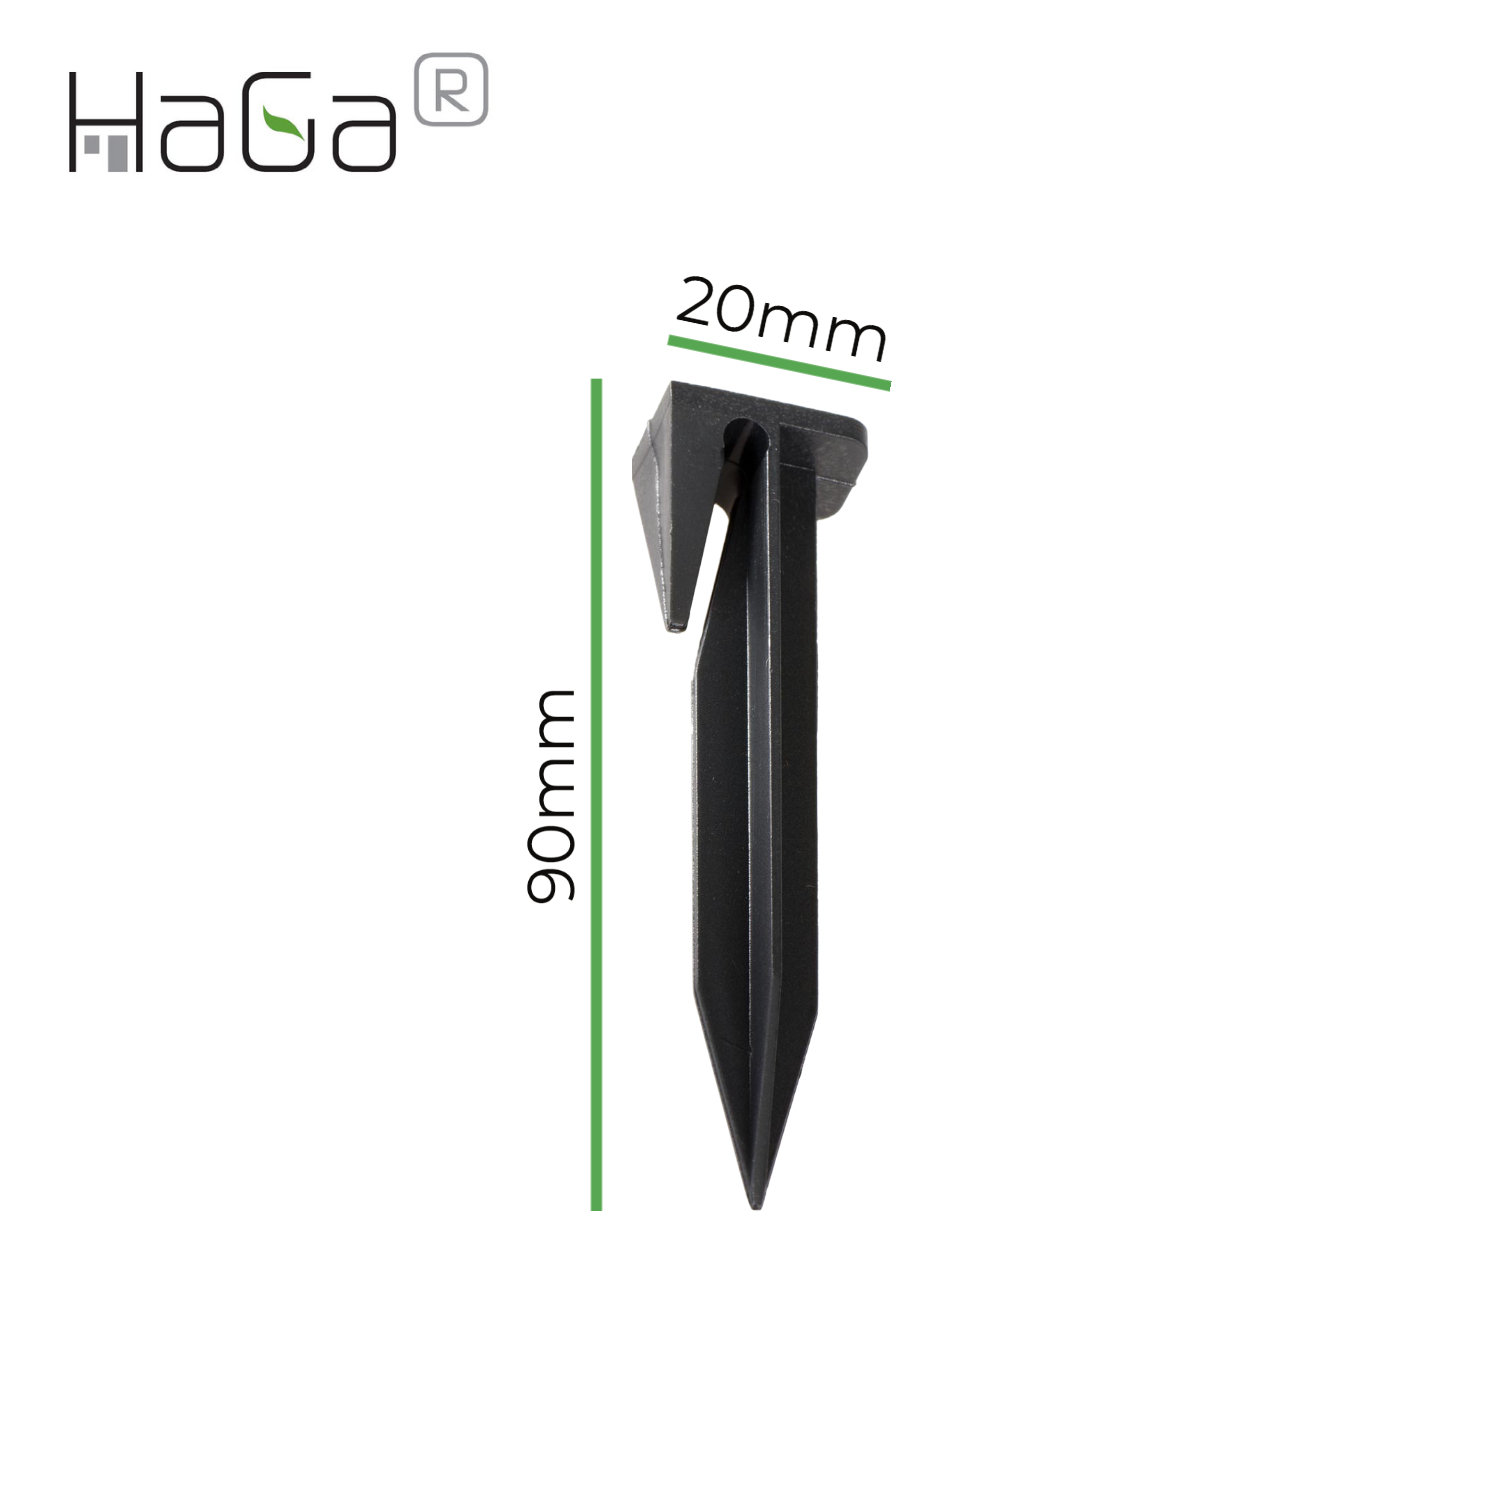 HaGa® Erdnägel für Mähroboter 100 Stück Begrenzugskabel-Erdhaken